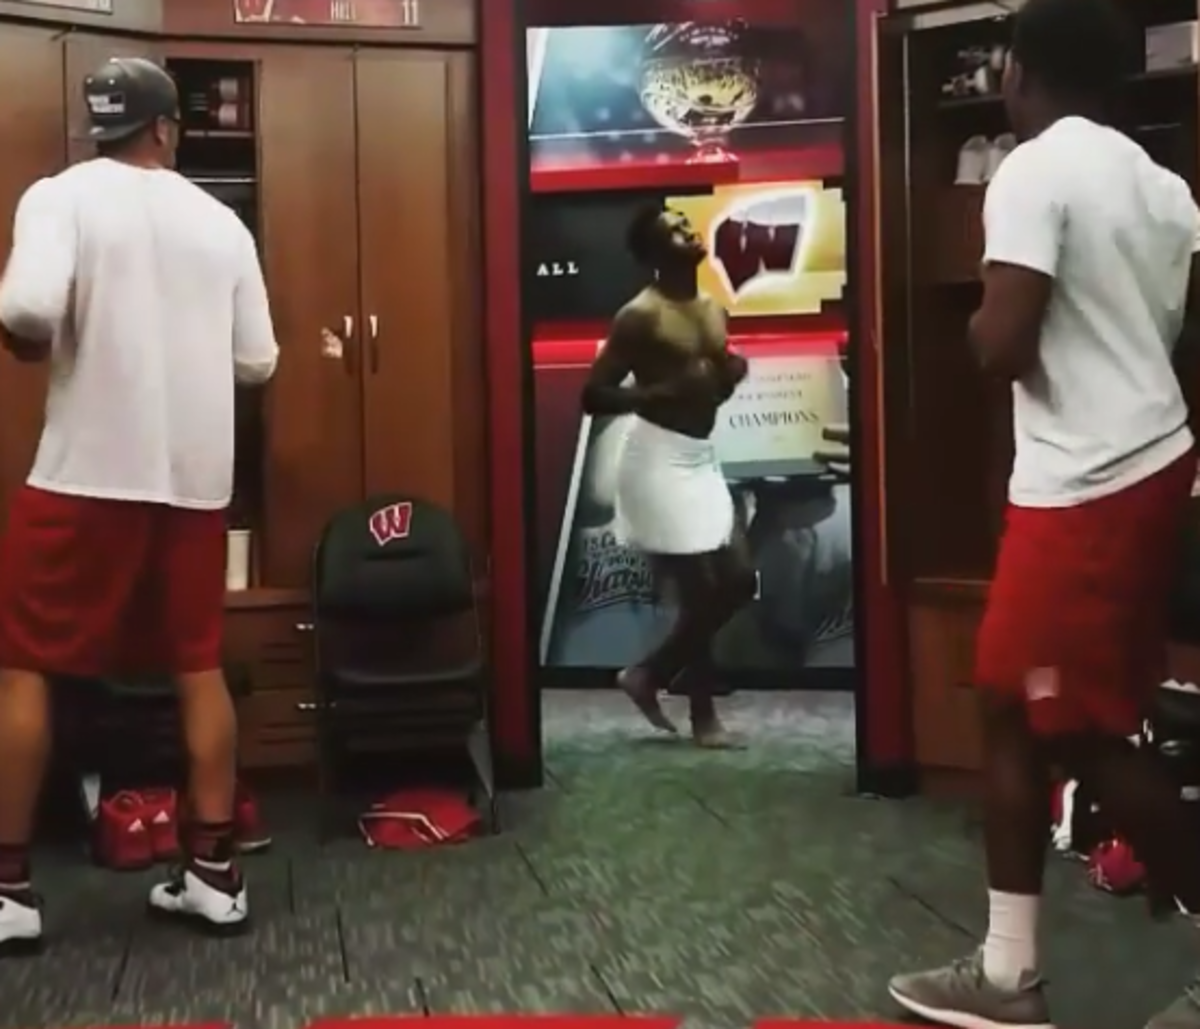 wisconsin basketball team dances in the locker room.